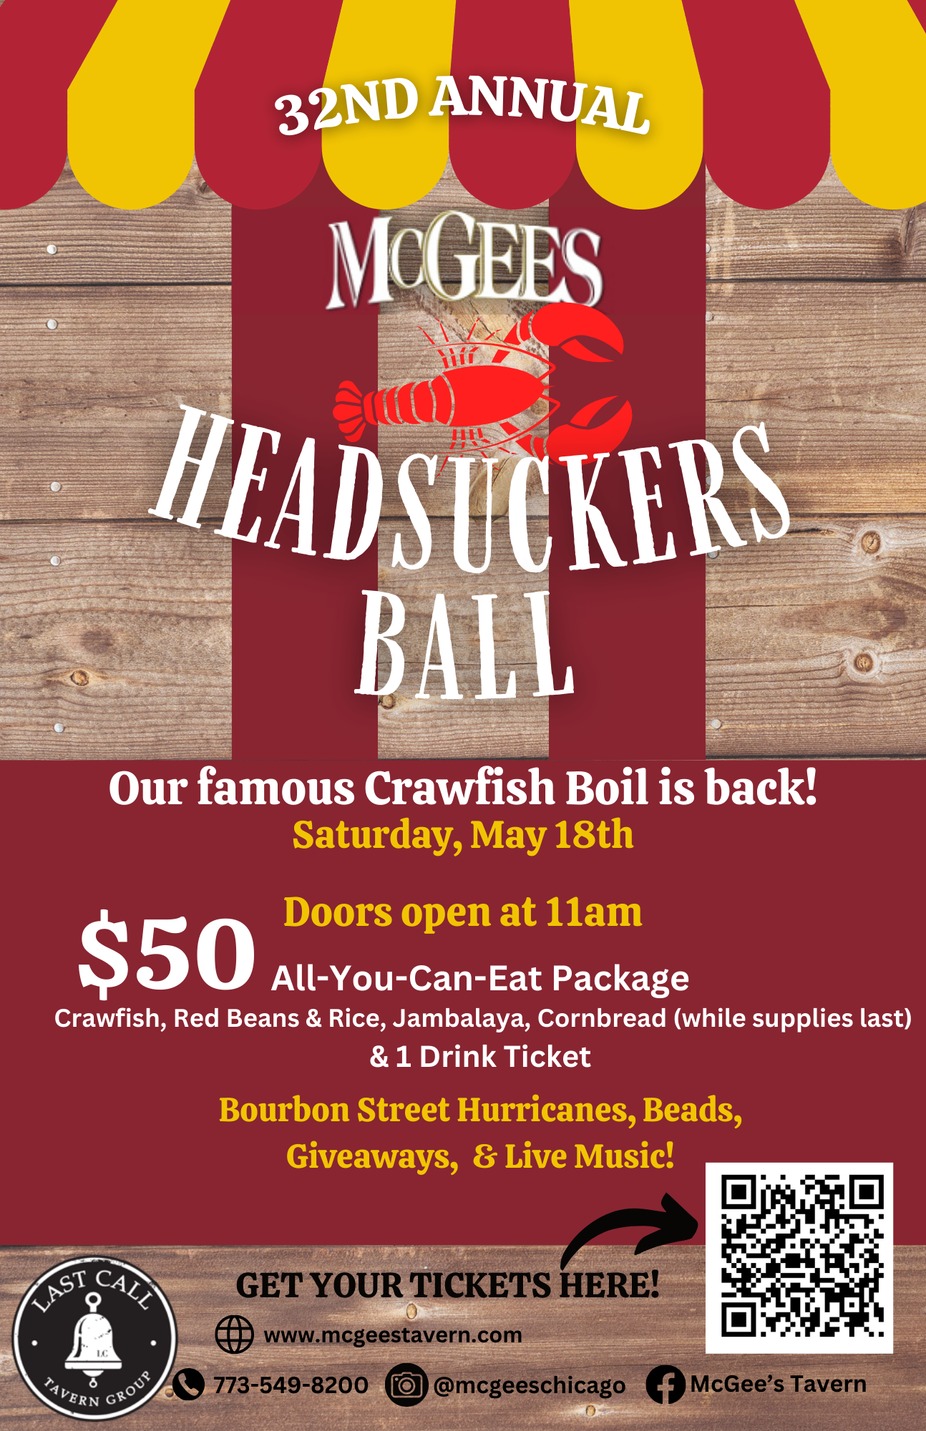 McGee's 32nd HeadSuckers Ball event photo